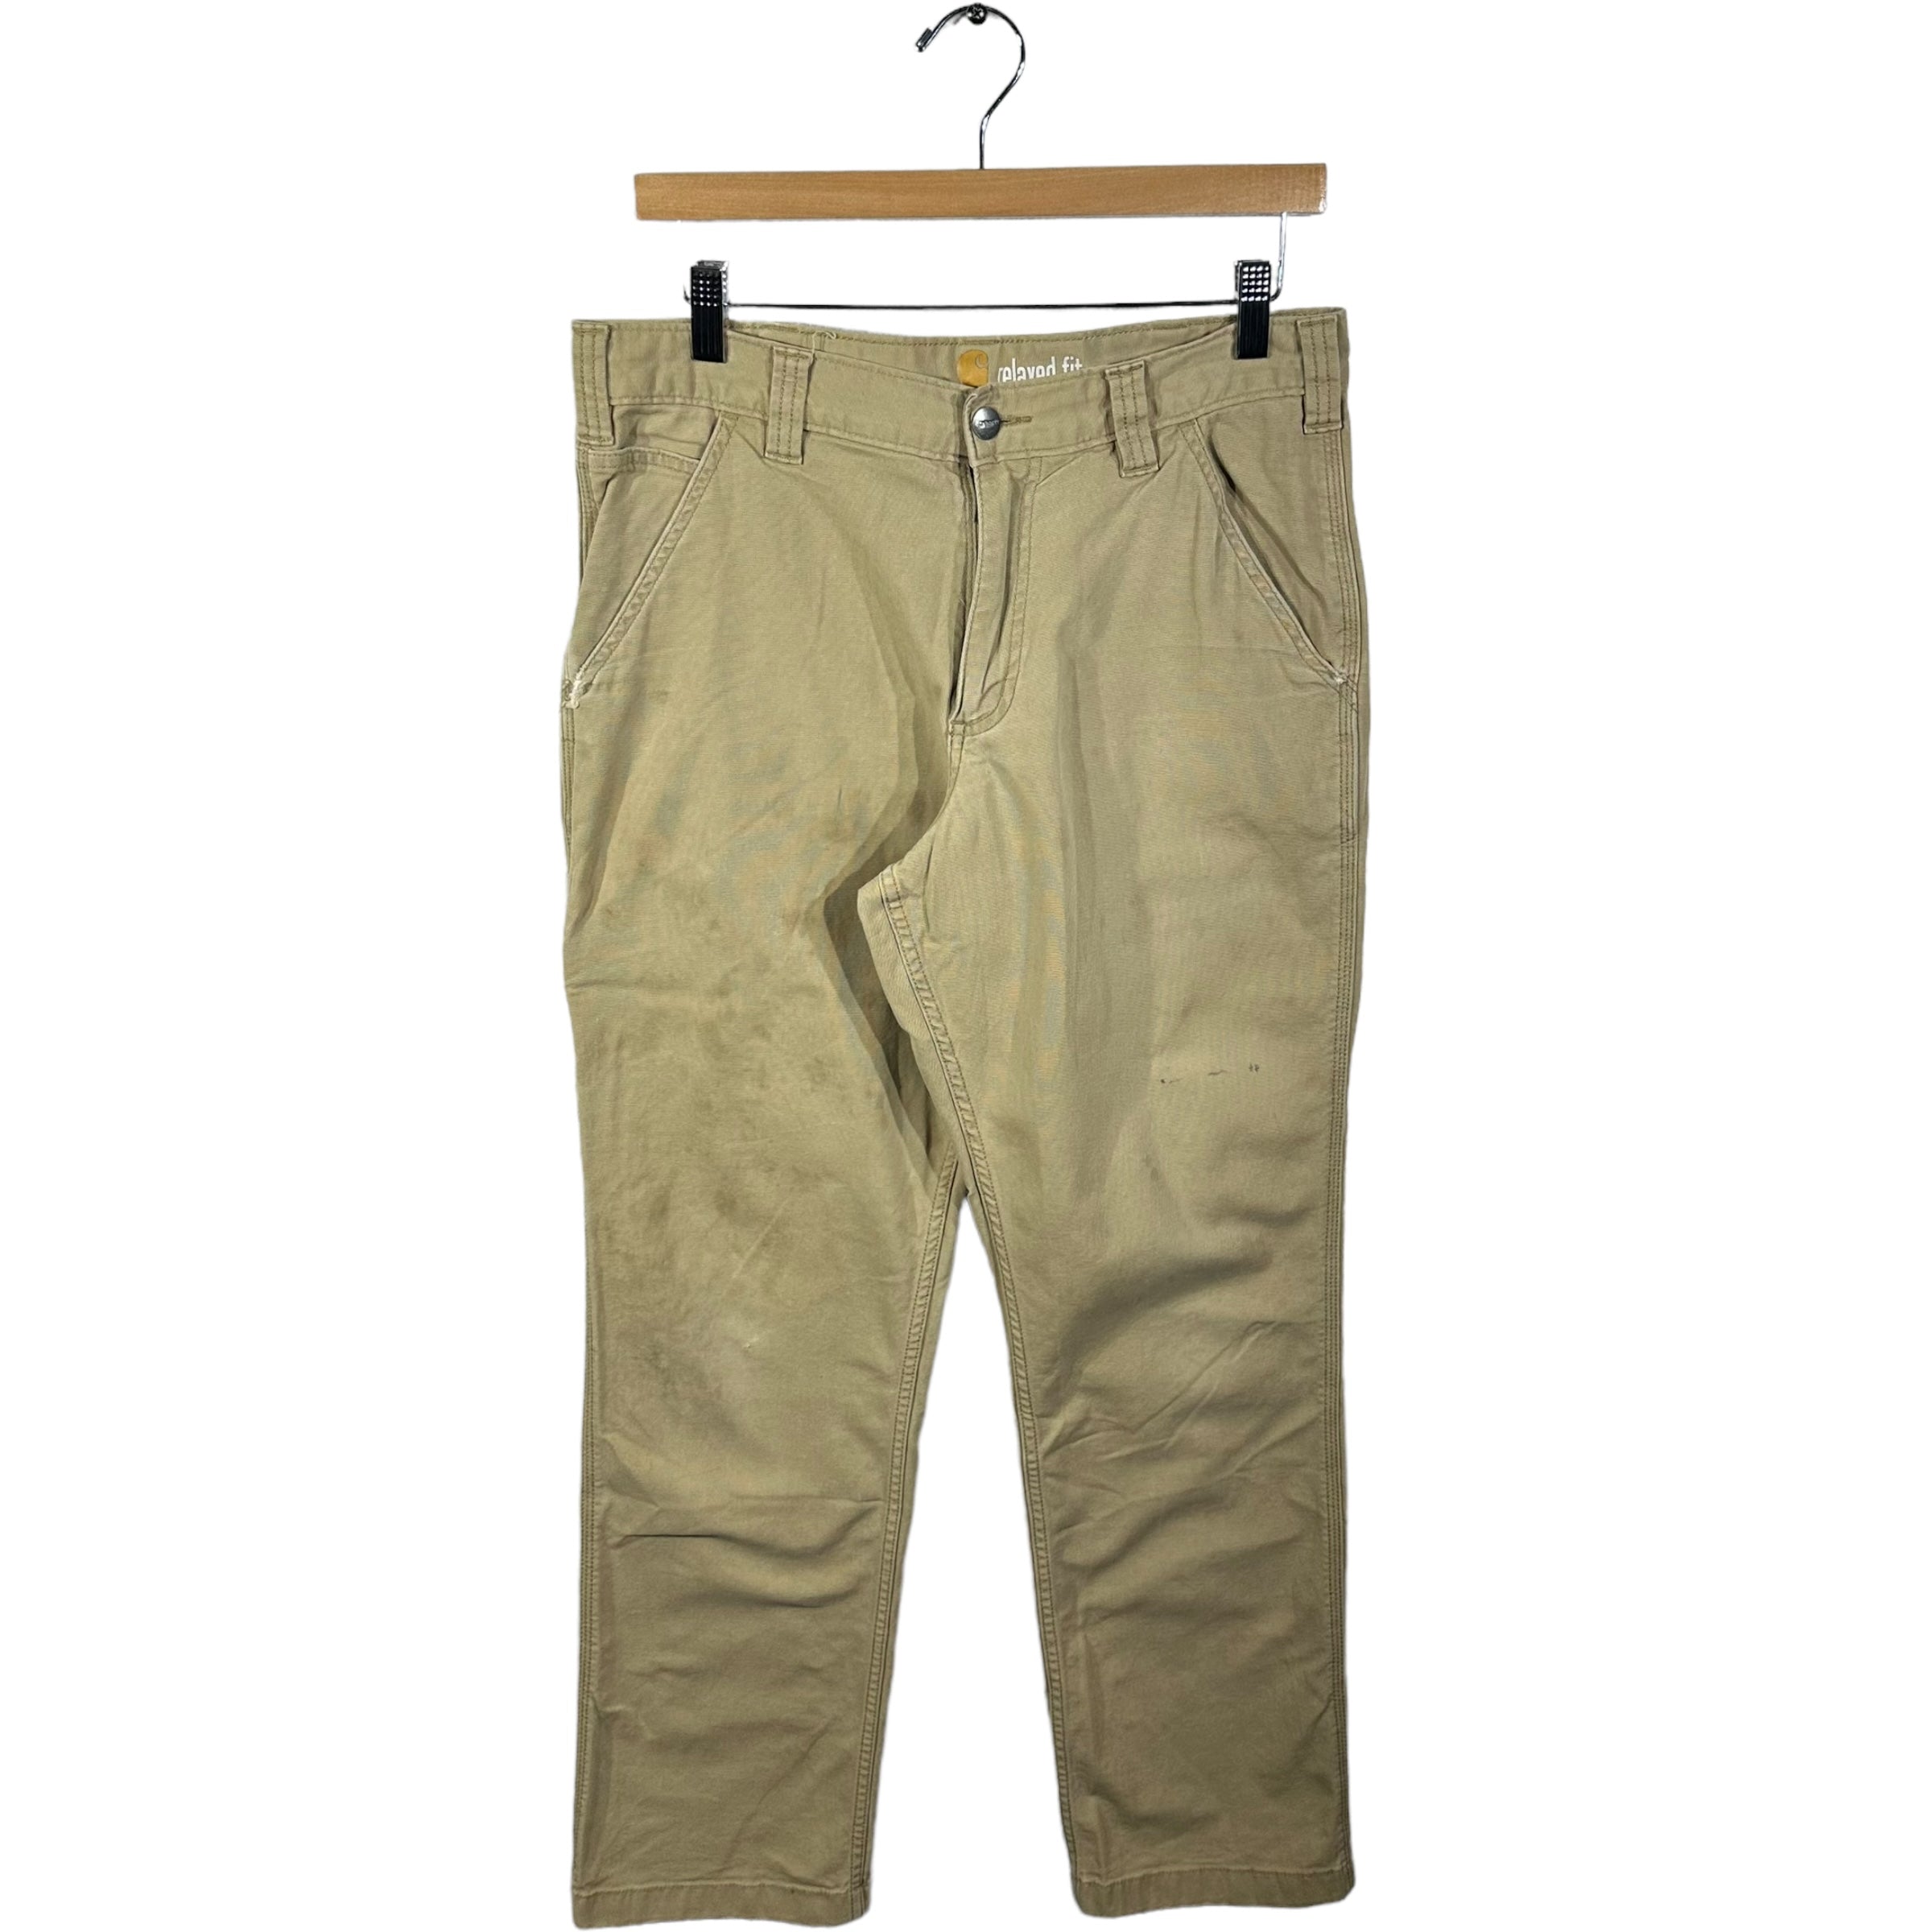 Vintage Carhartt Chino Pants